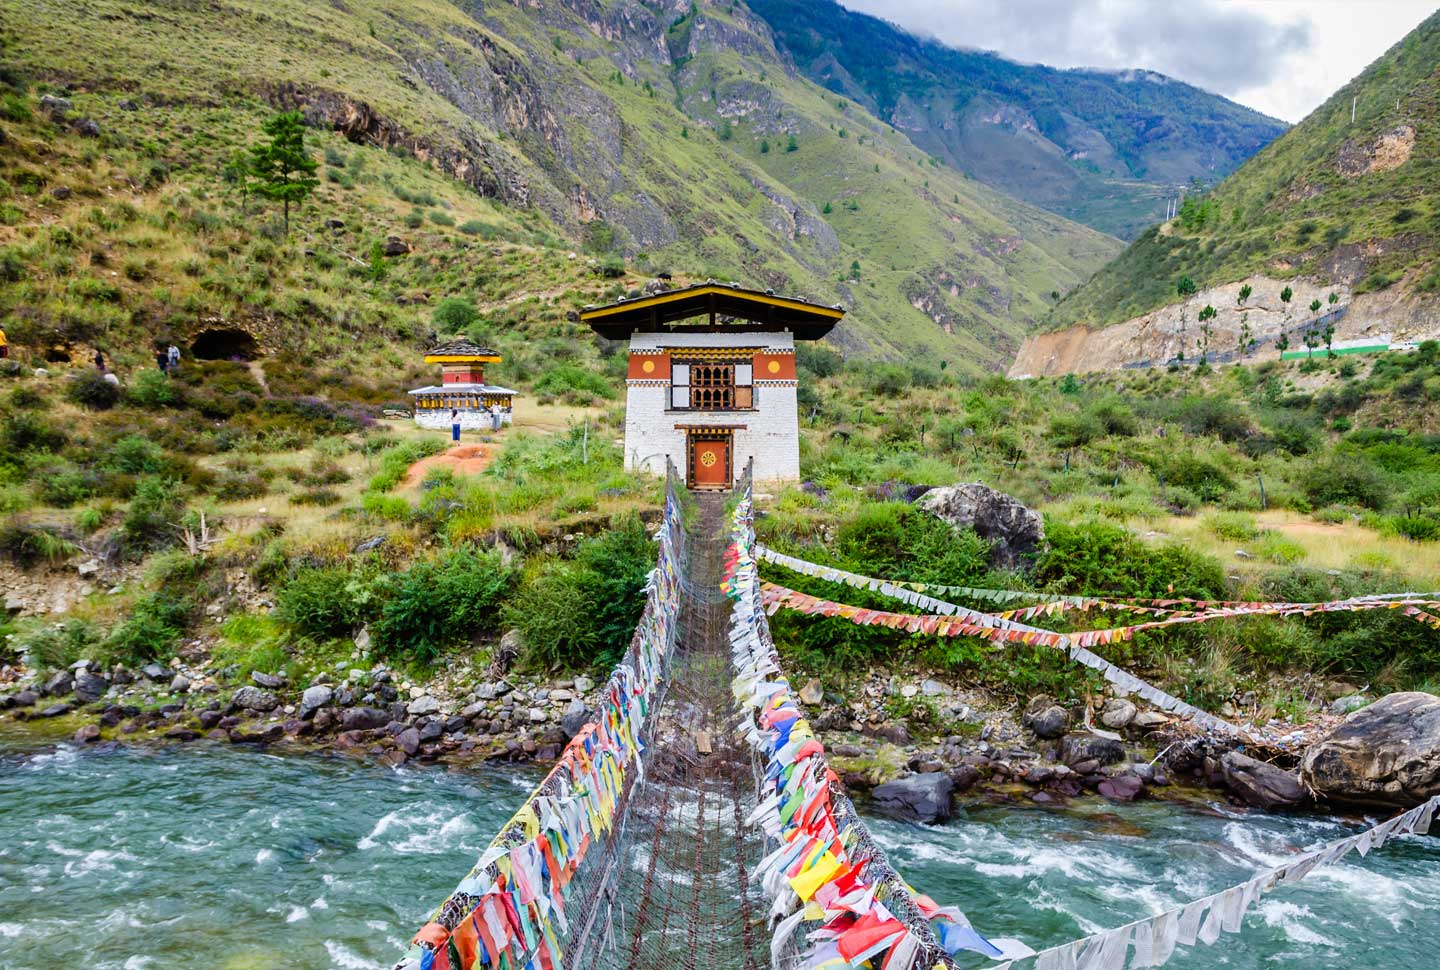 Iron Chain Bridge of Tamchog Lhakhang Monastery, Paro River, Bhutan